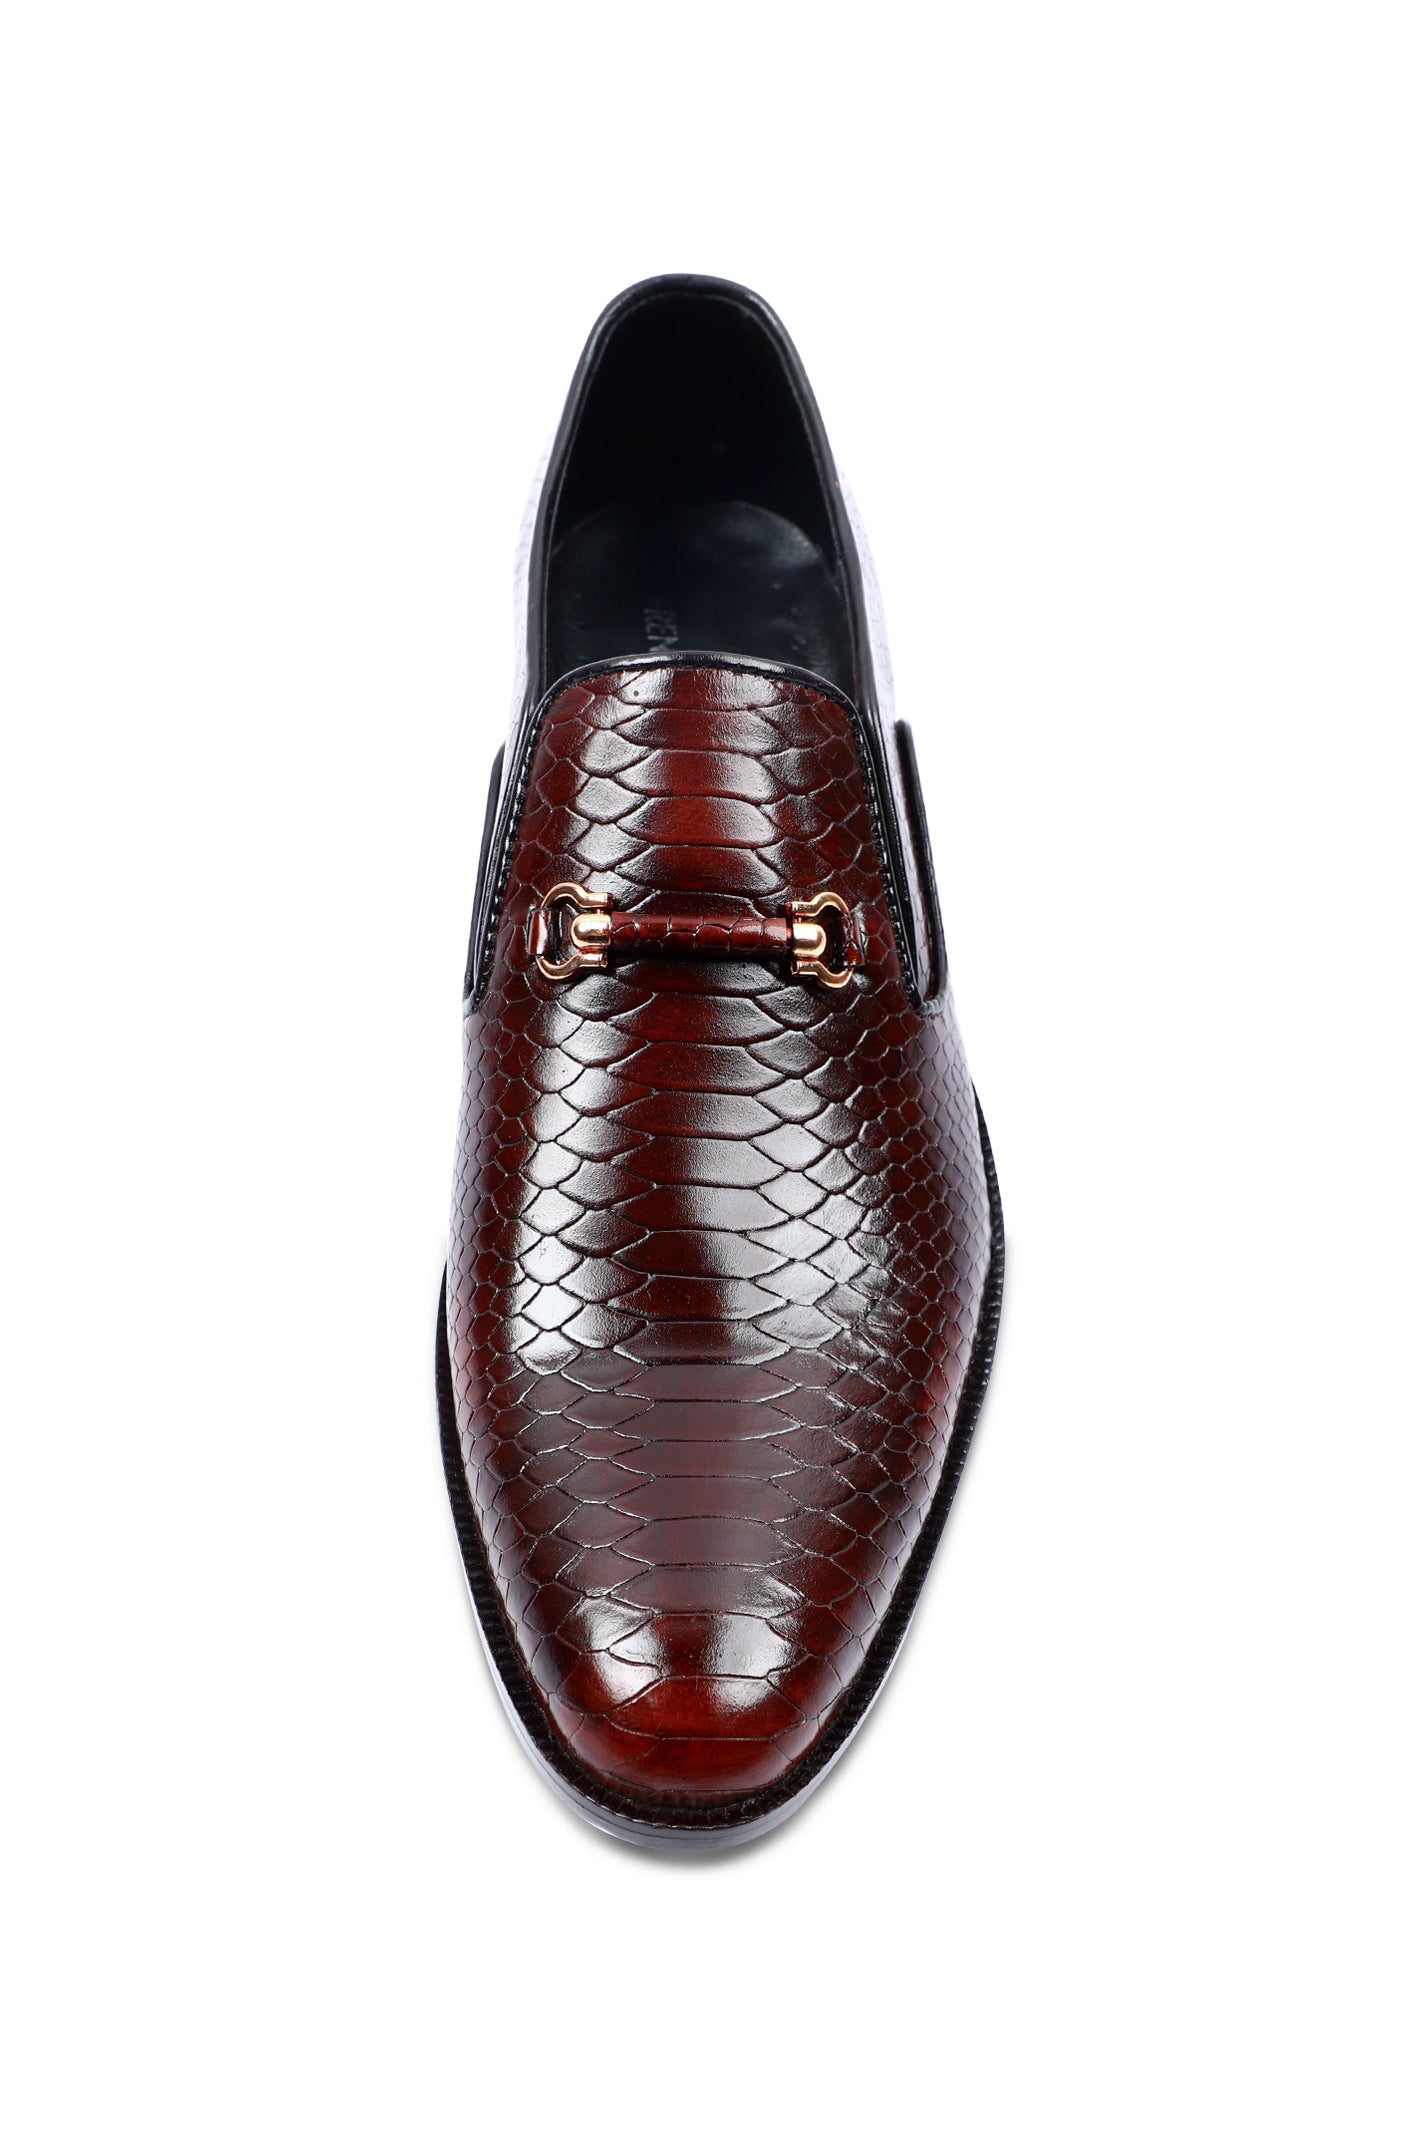 Formal Shoes For Men in Maroon SKU: SMF-0194-MAROON - Diners